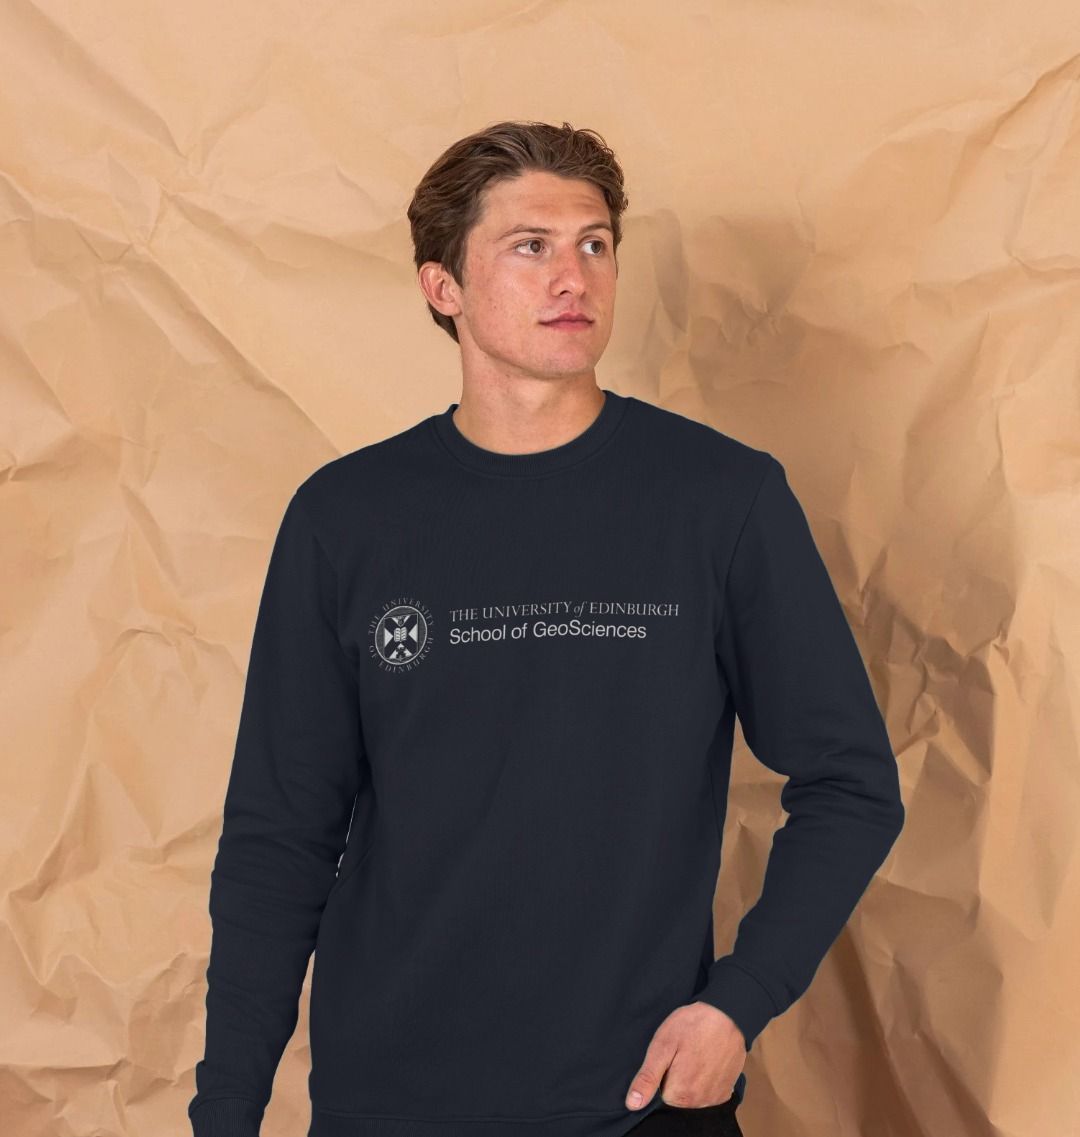 Our model wearing our School of GeoSciences sweatshirt in navy.